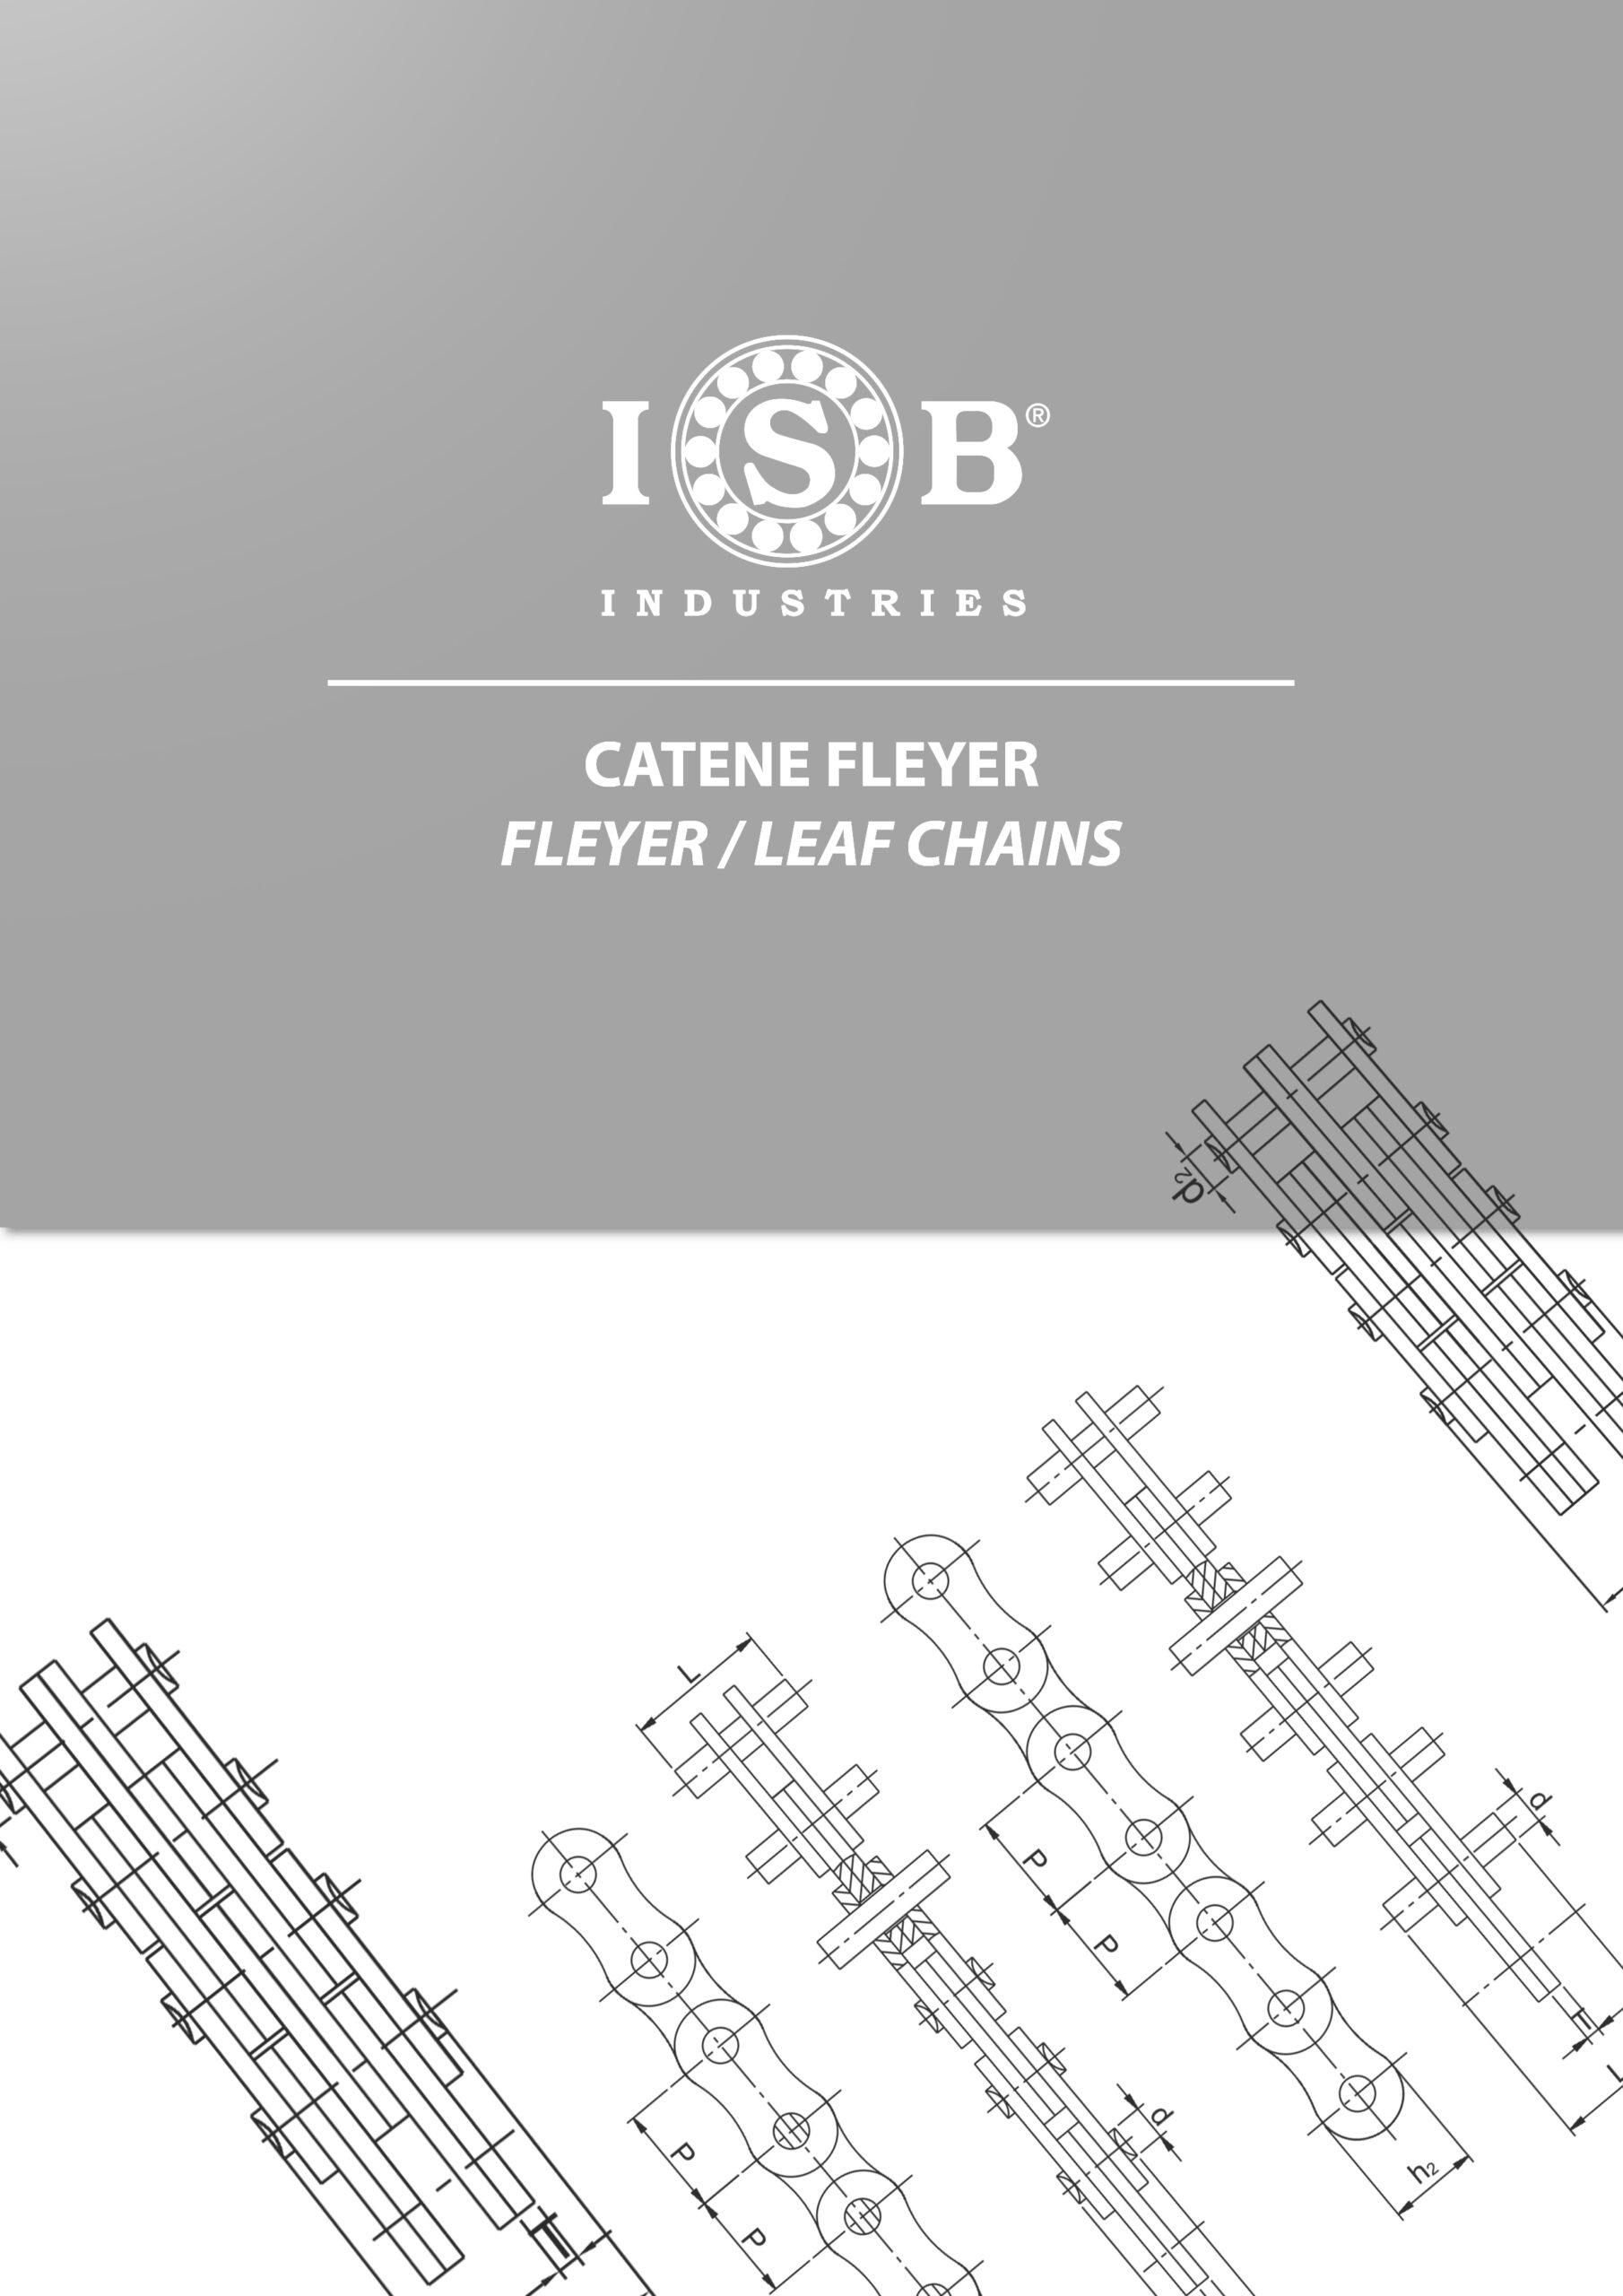 Cadena-fleyer-ISB-scaled.jpg